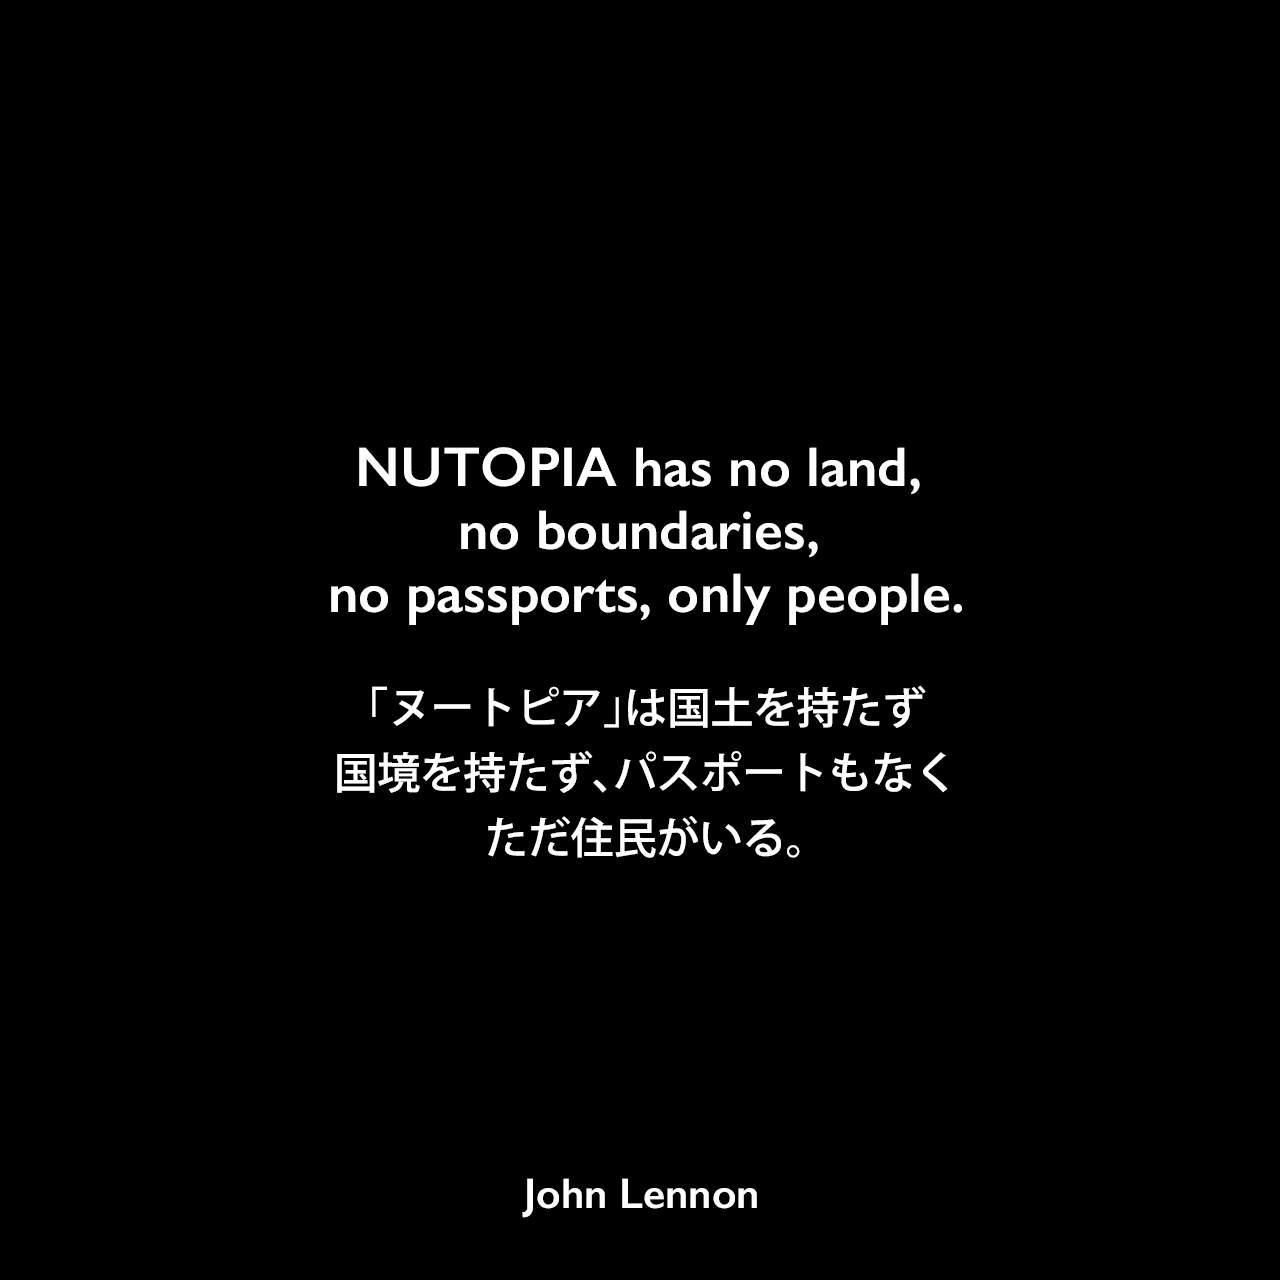 NUTOPIA has no land, no boundaries, no passports, only people.「ヌートピア」は国土を持たず、国境を持たず、パスポートもなく、ただ住民がいる。- ジョン・レノンが1973年4月に宣言John Lennon